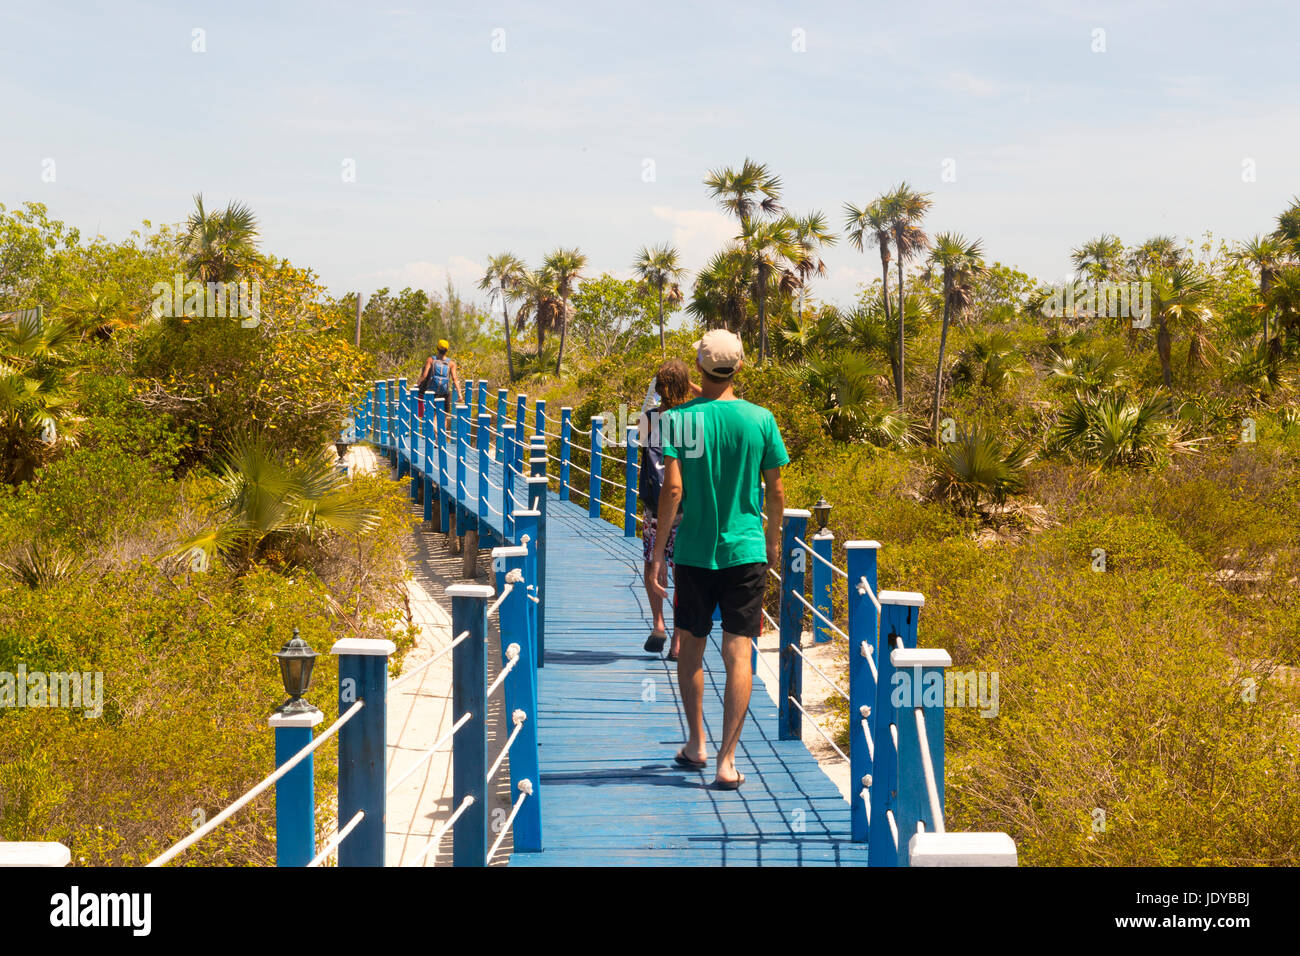 People on the walk-way in Playa Pilar, Cayo Guillermo, Cuba Stock Photo